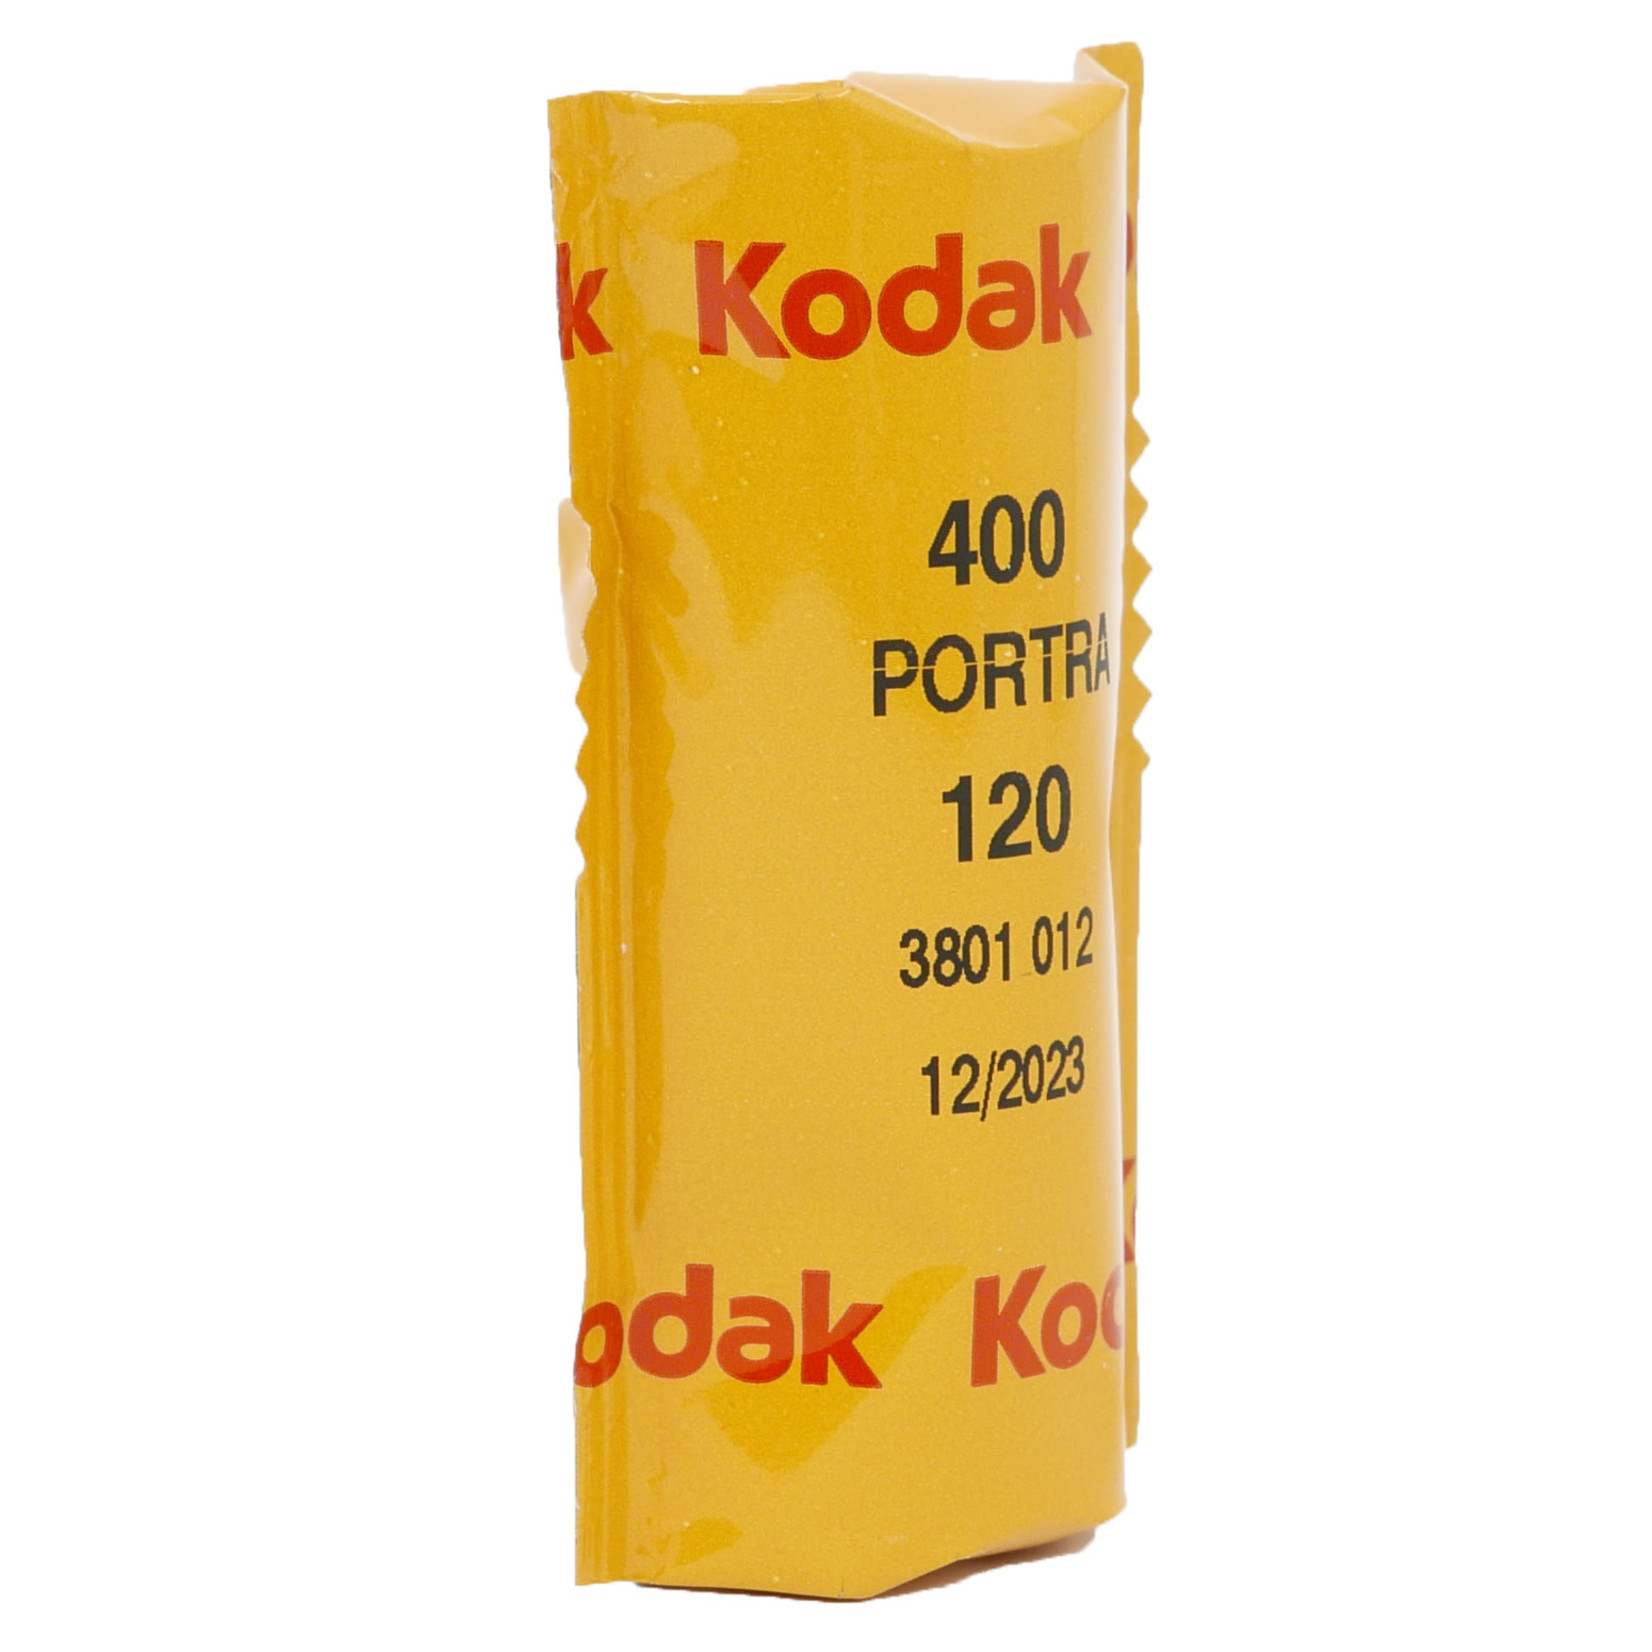 Kodak Kodak Portra 400 120